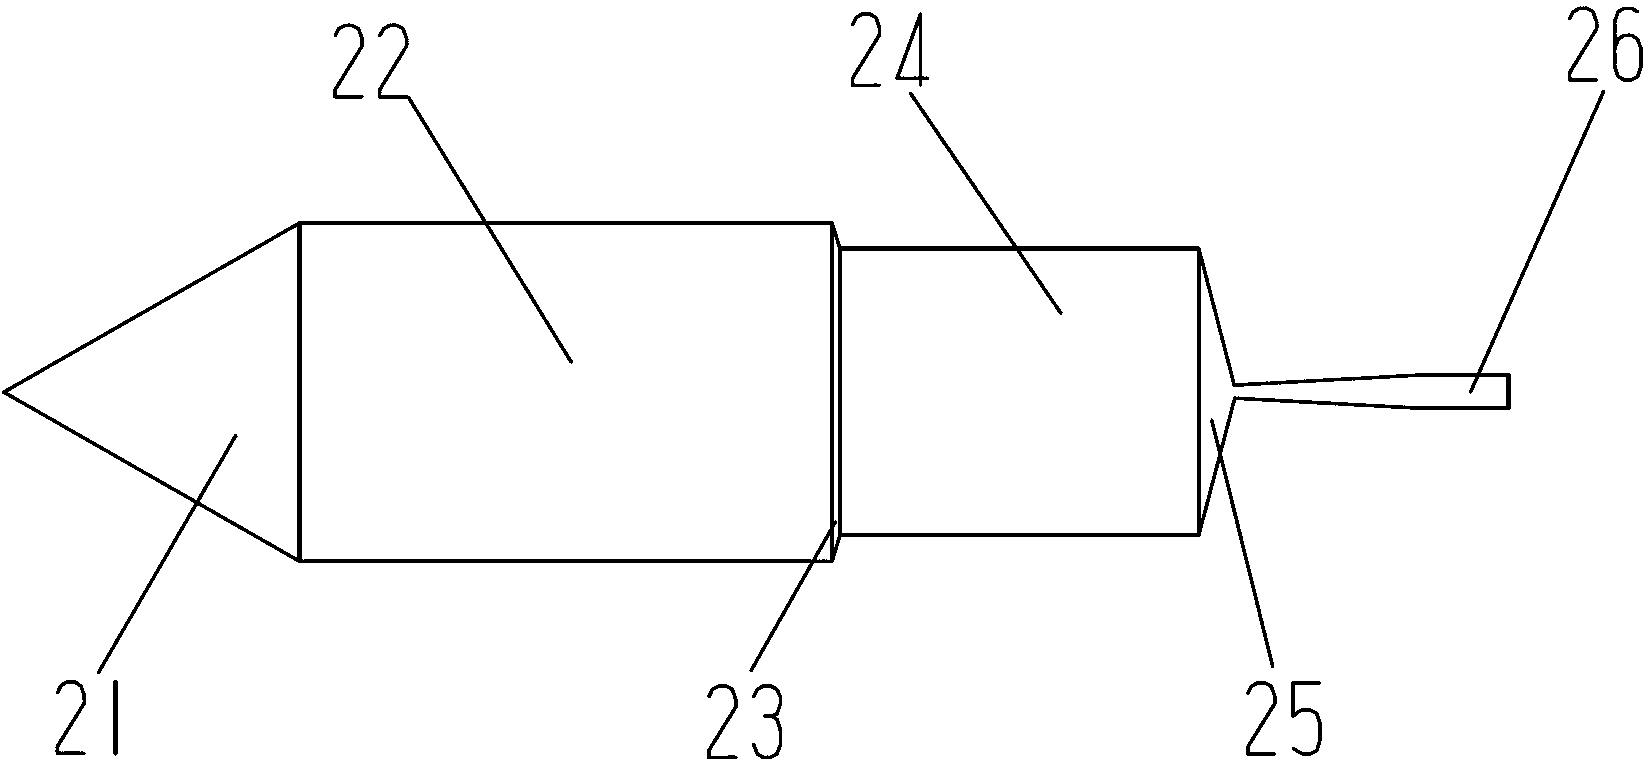 Diameter transitional czochralski silicon growing method